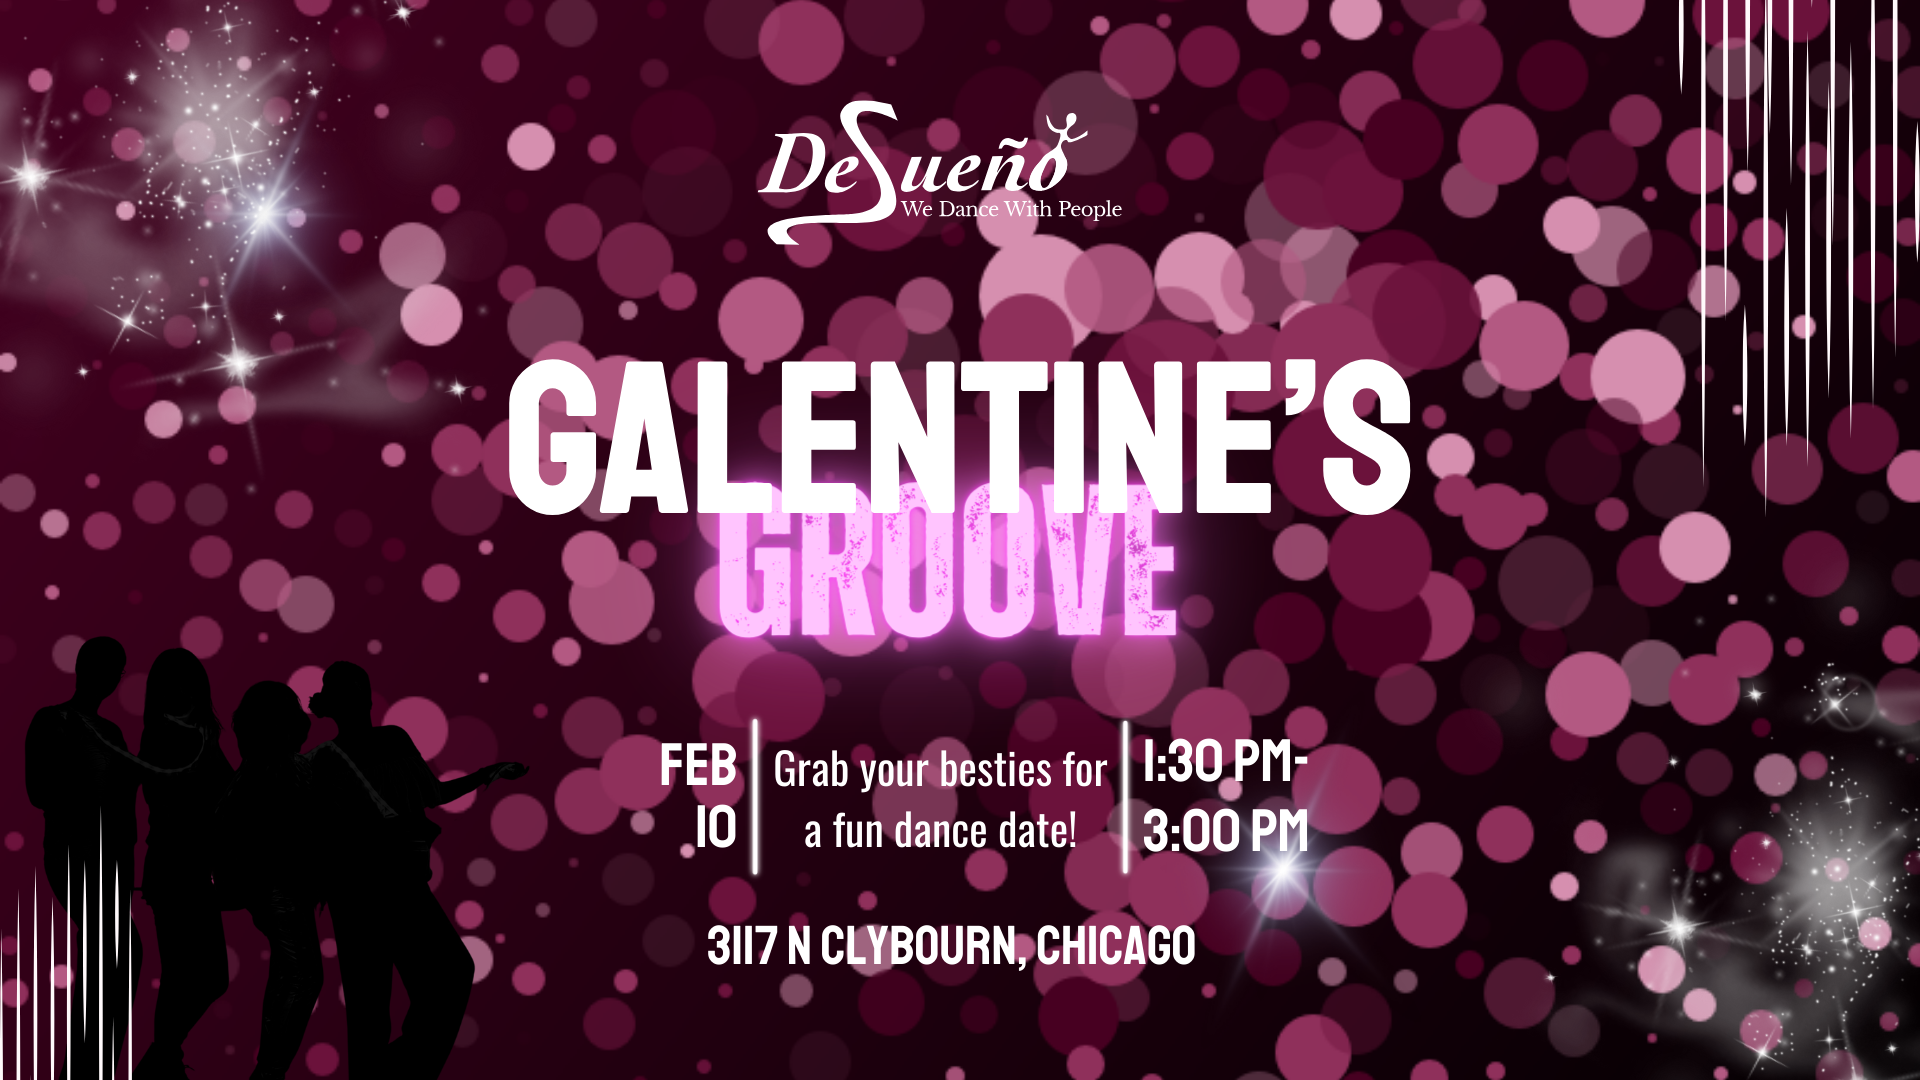 Galentines Groove dance workshop